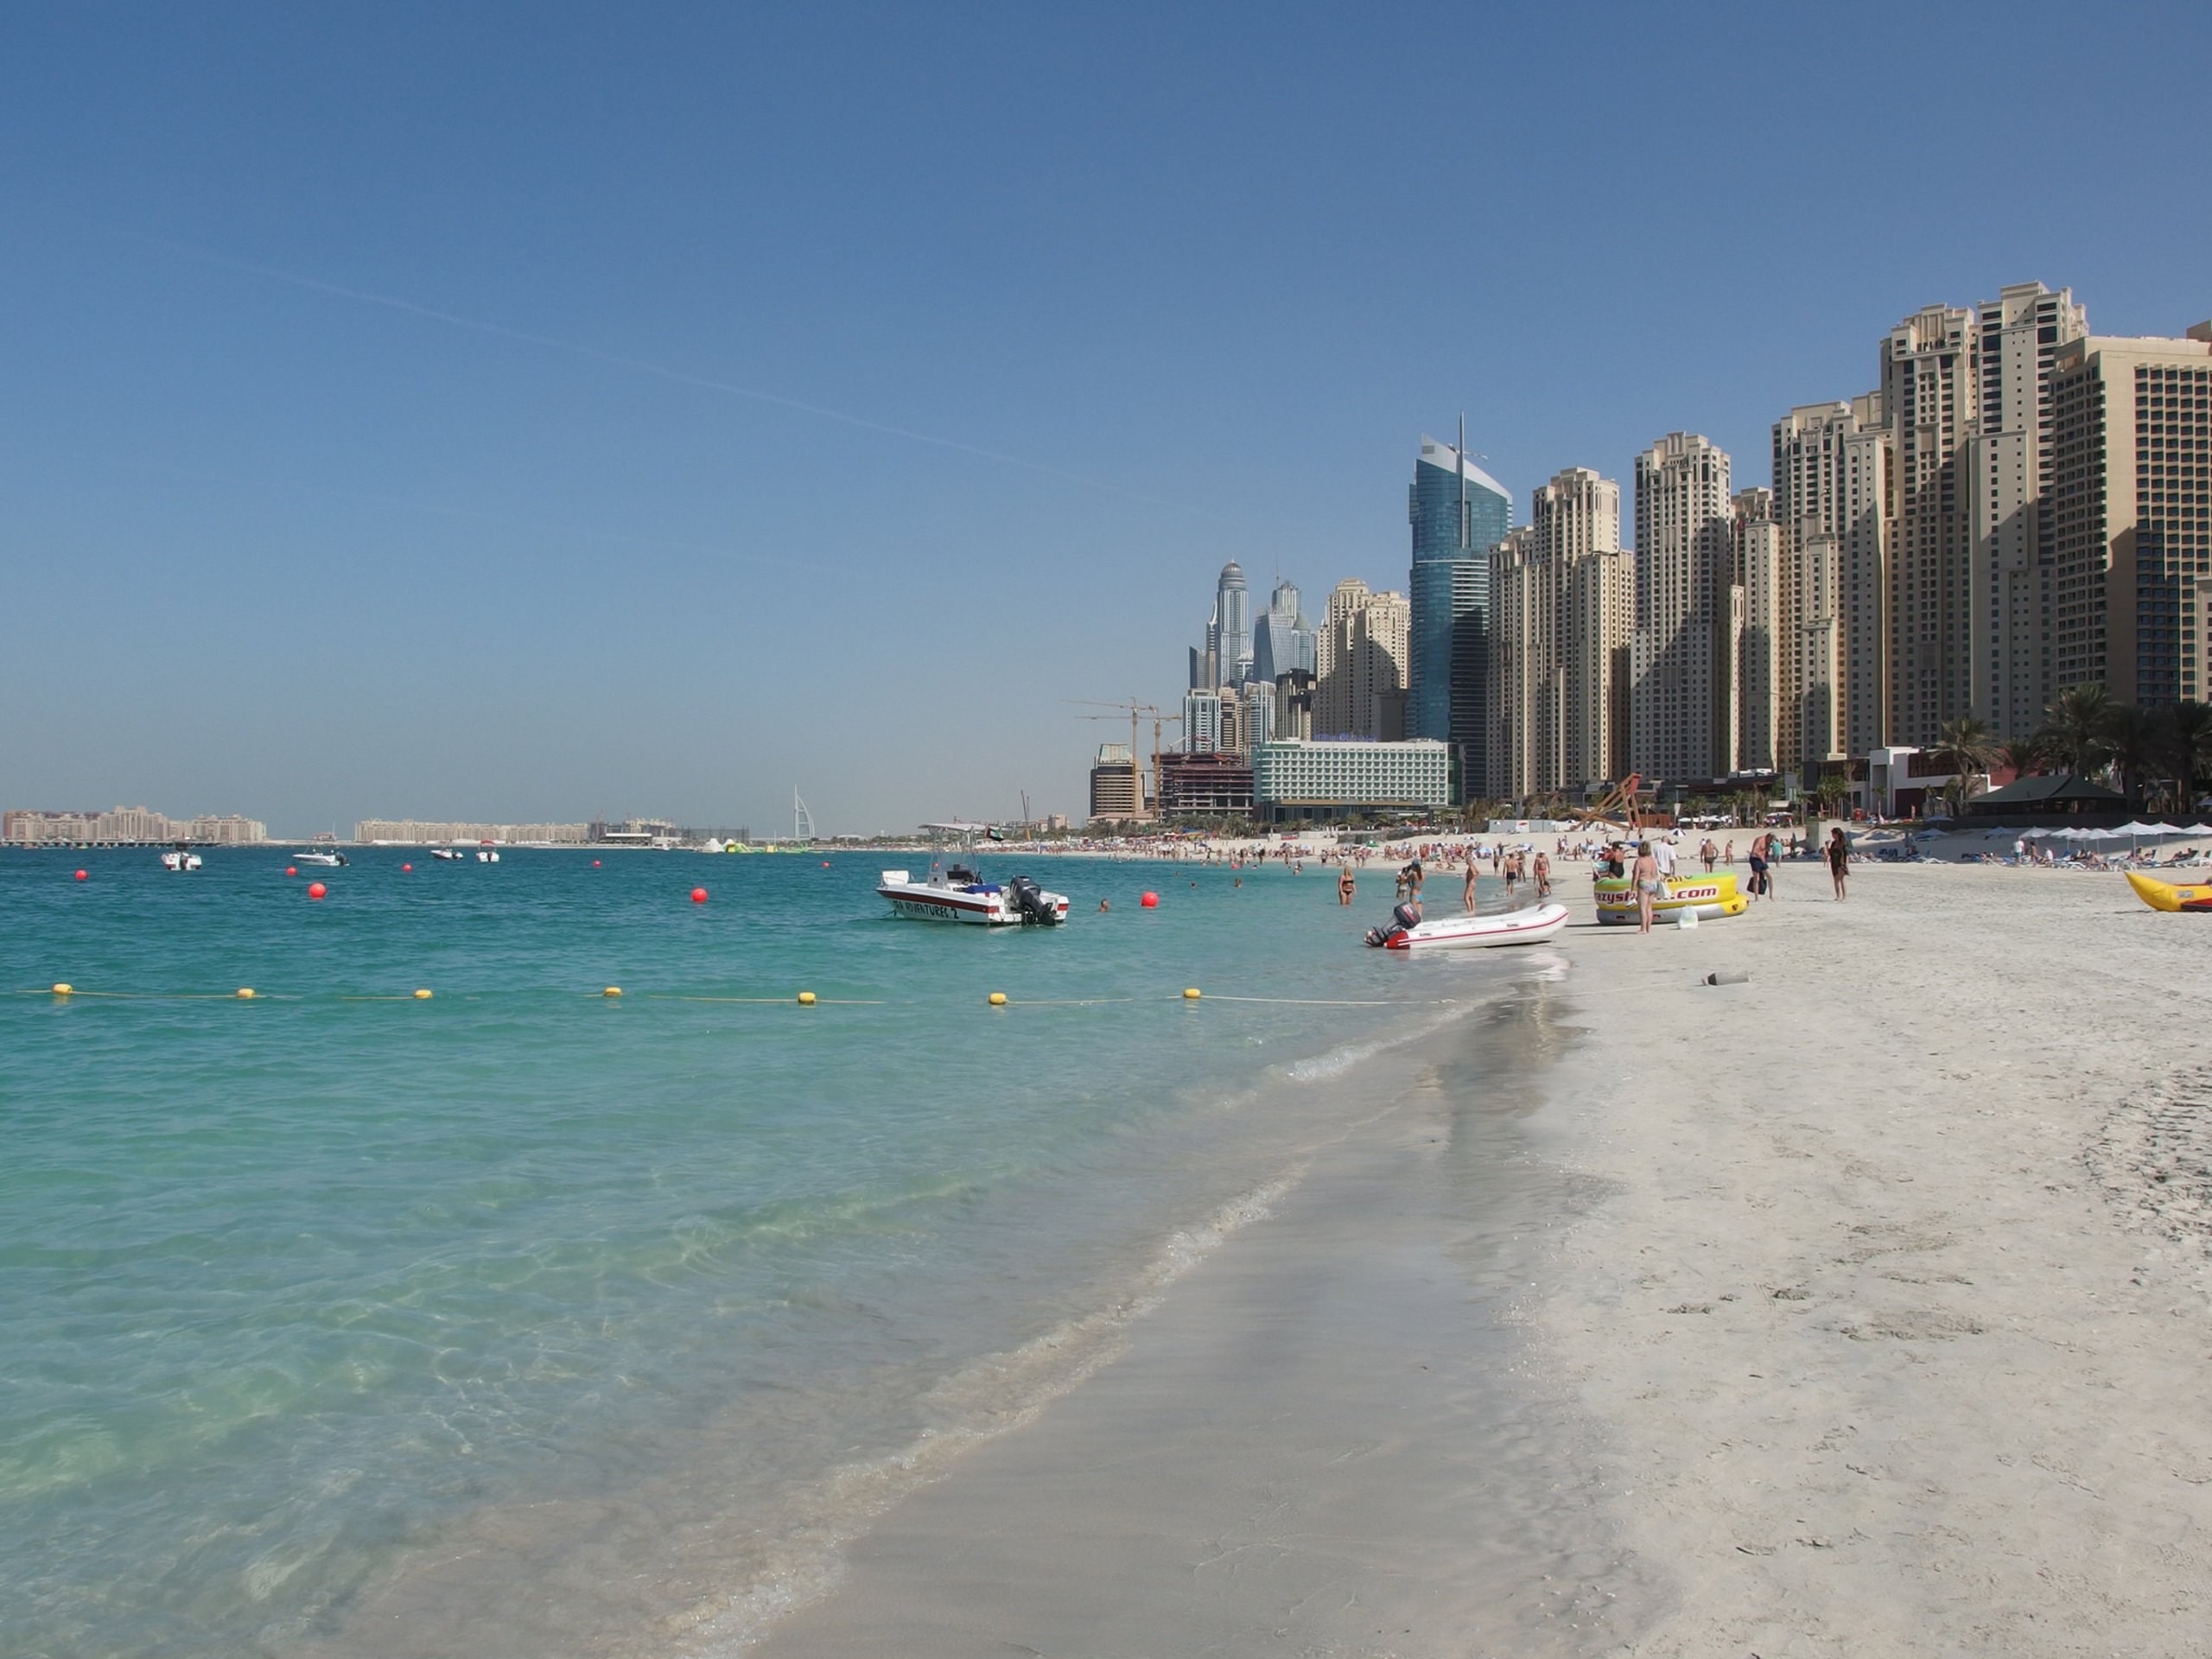 Пляж Джумейра в Дубае. Джумейра Бич Резиденс. Пляж JBR В Дубае. Пляж араб